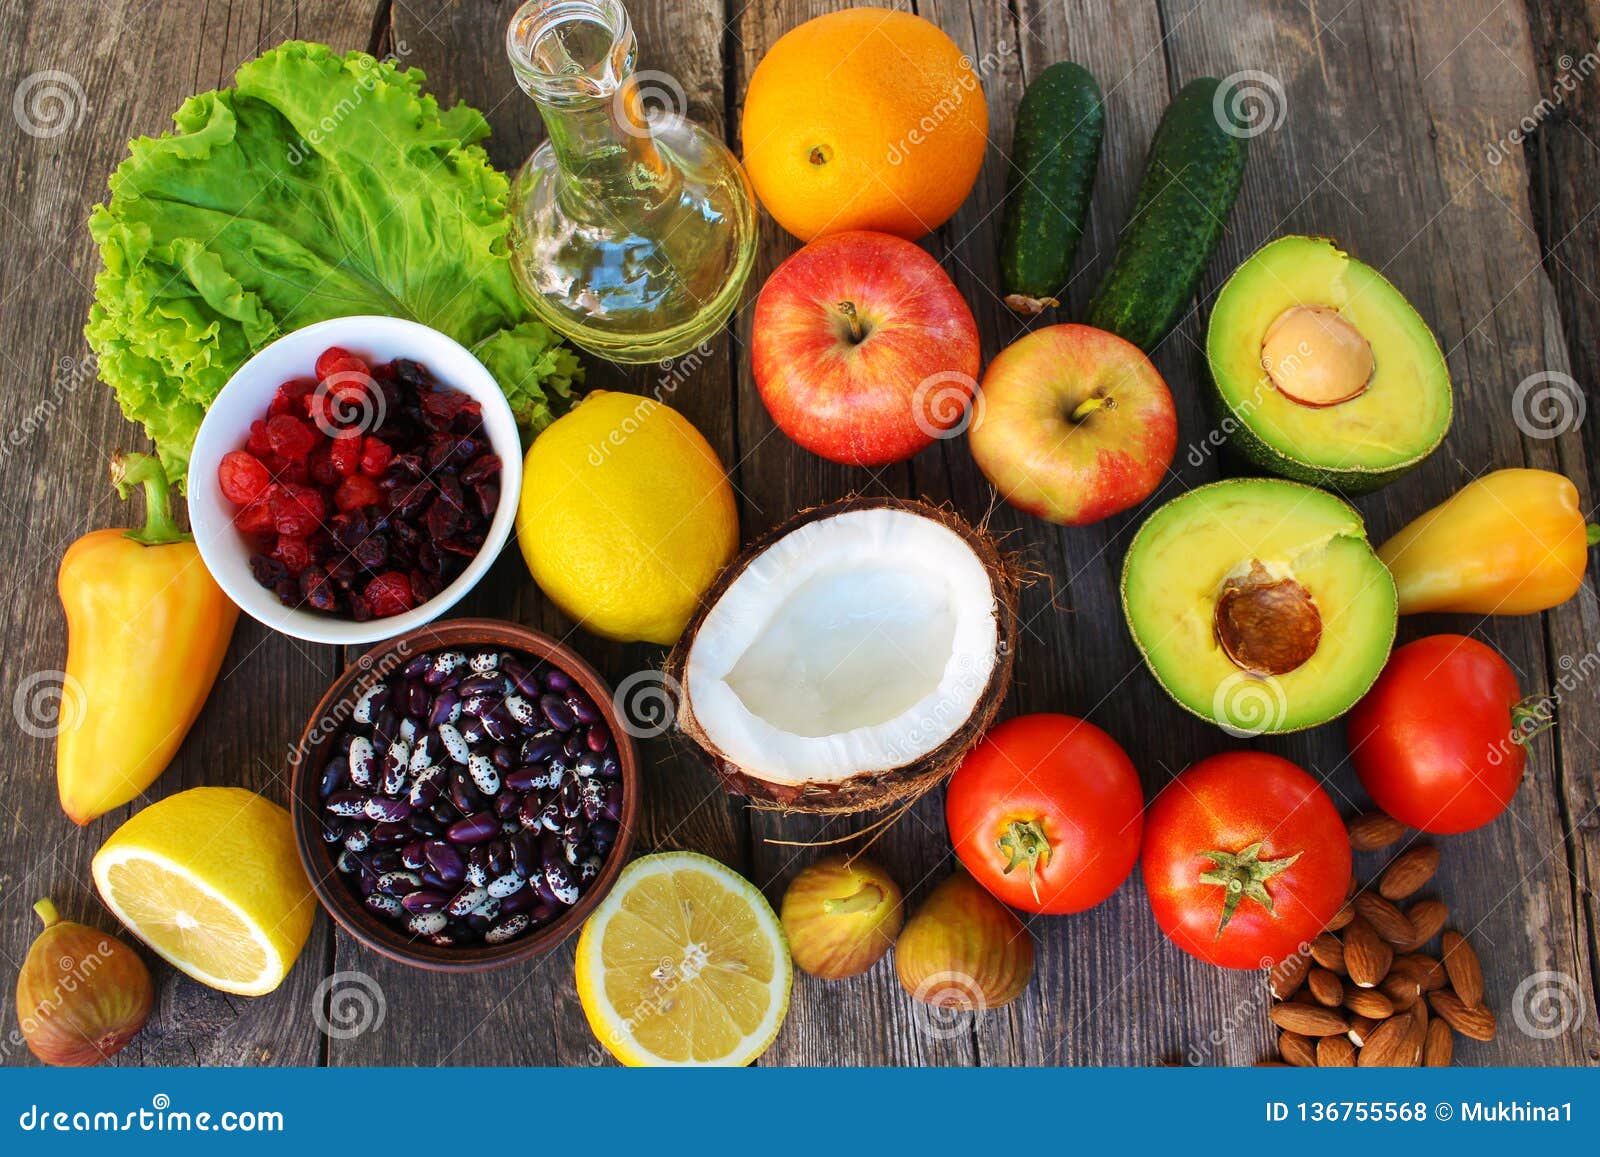 healthy food of vegetable origin on old wooden background. concept of proper nutrition.